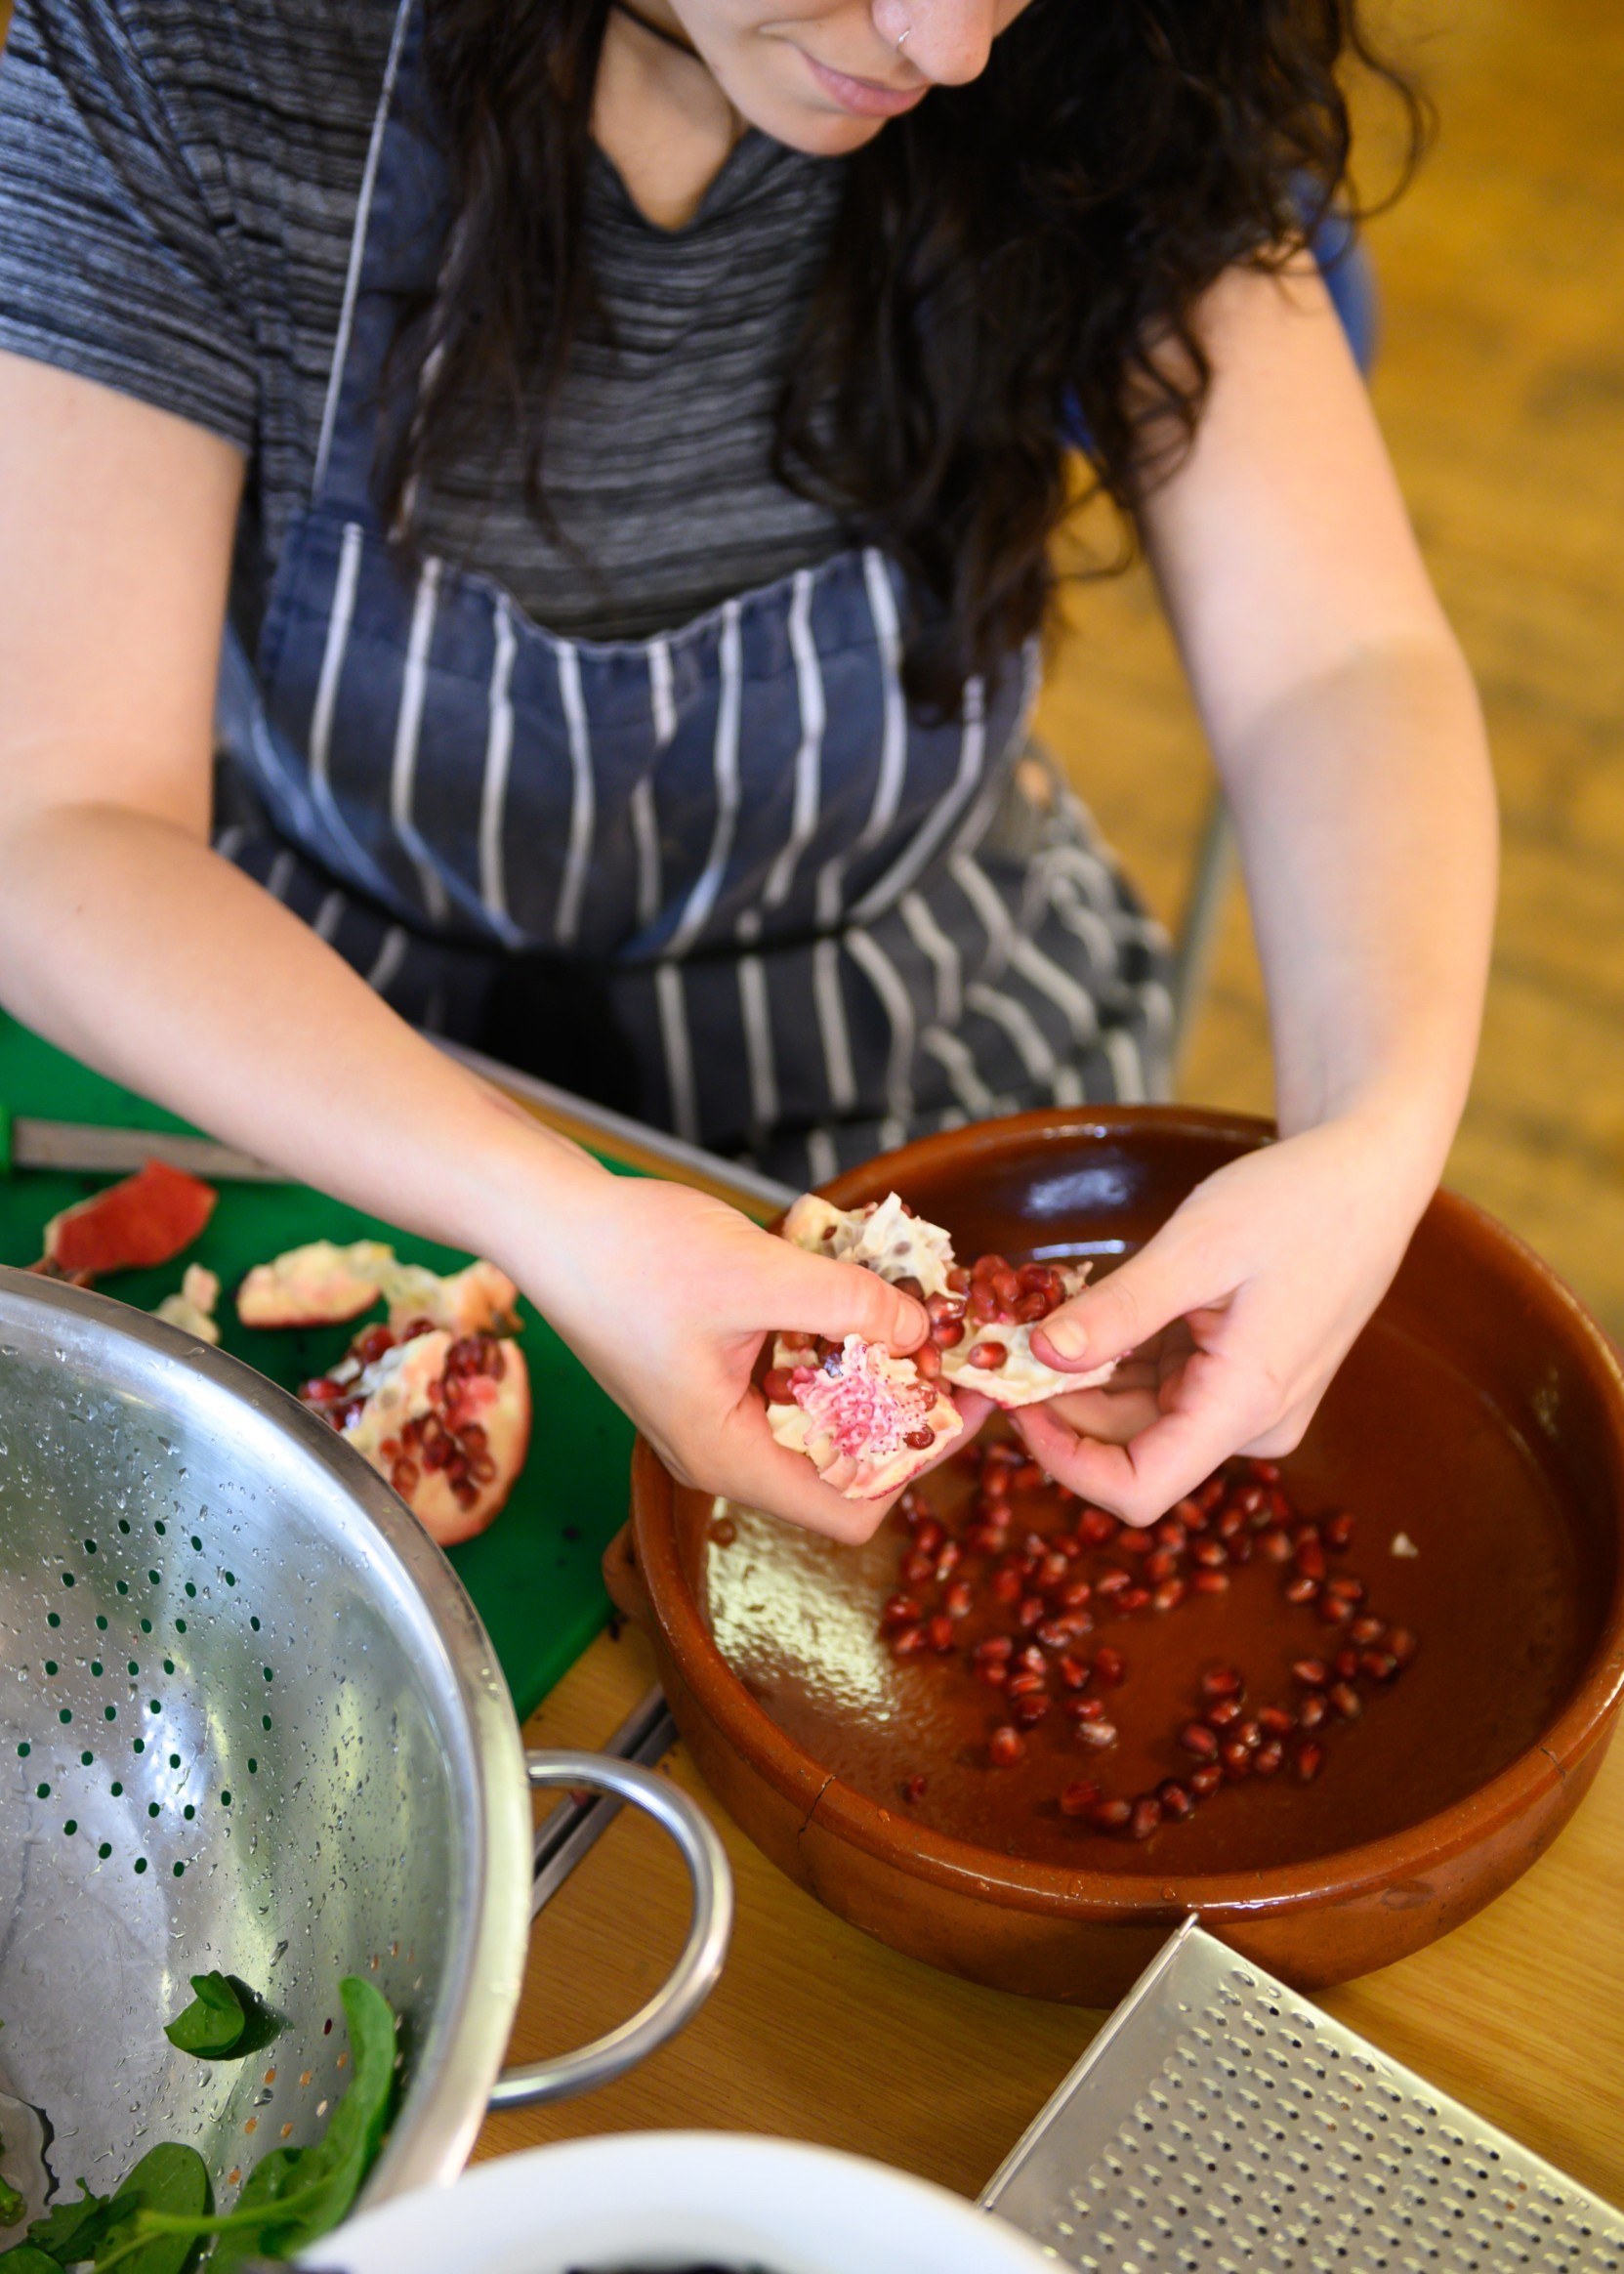 A woman preparing food in a bowl